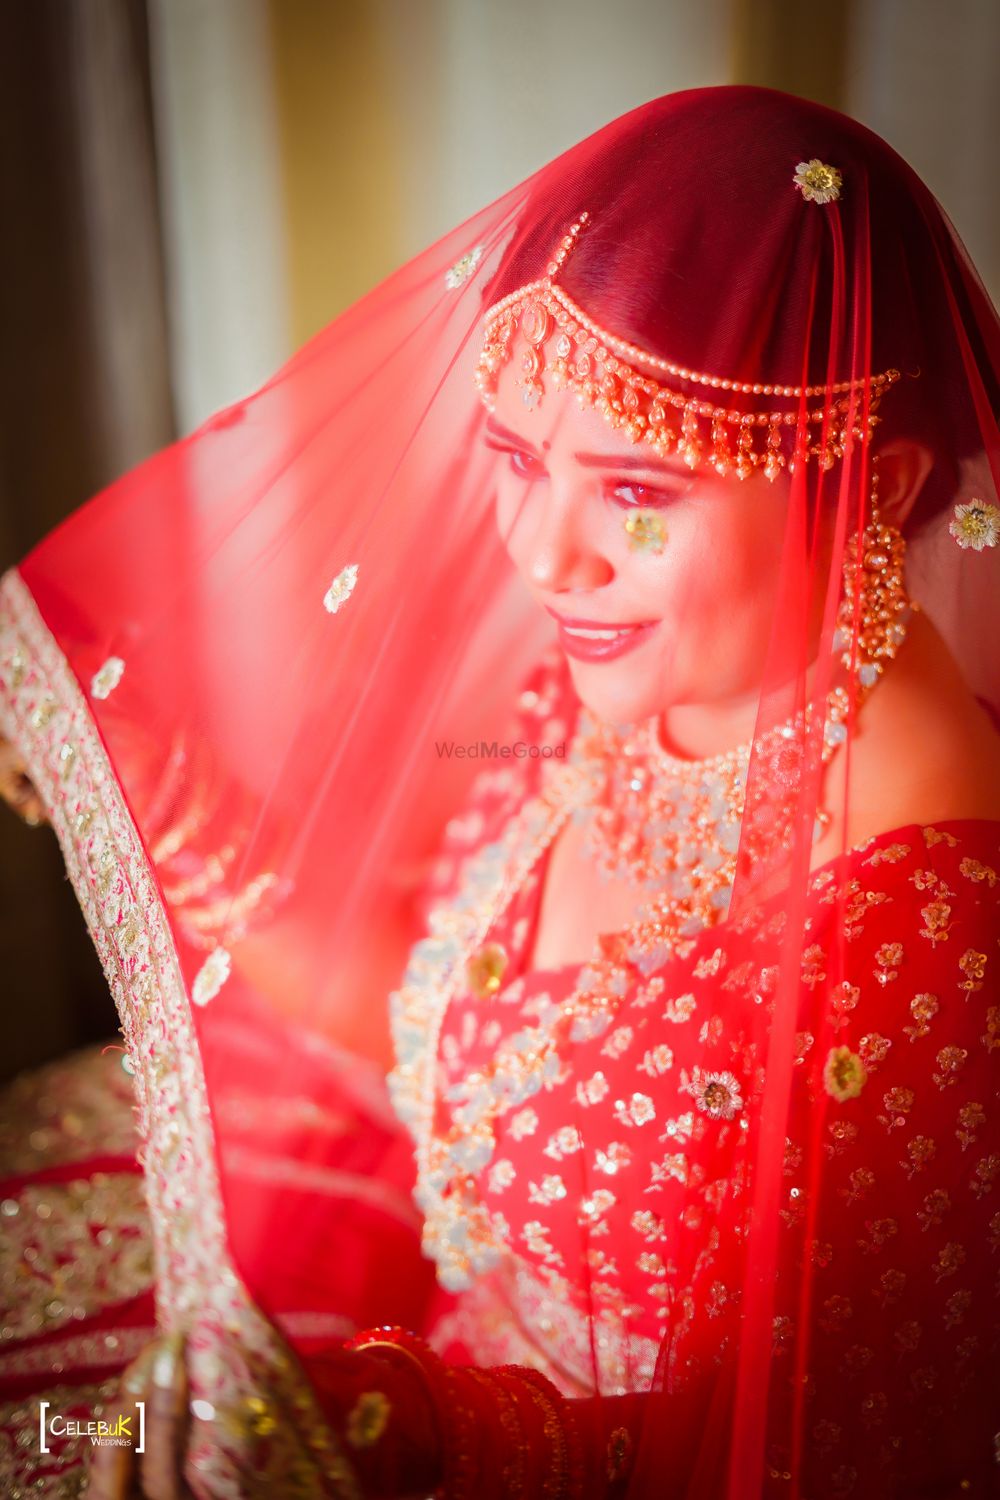 Photo From Apoorva Singh - By CelebLuk Weddings